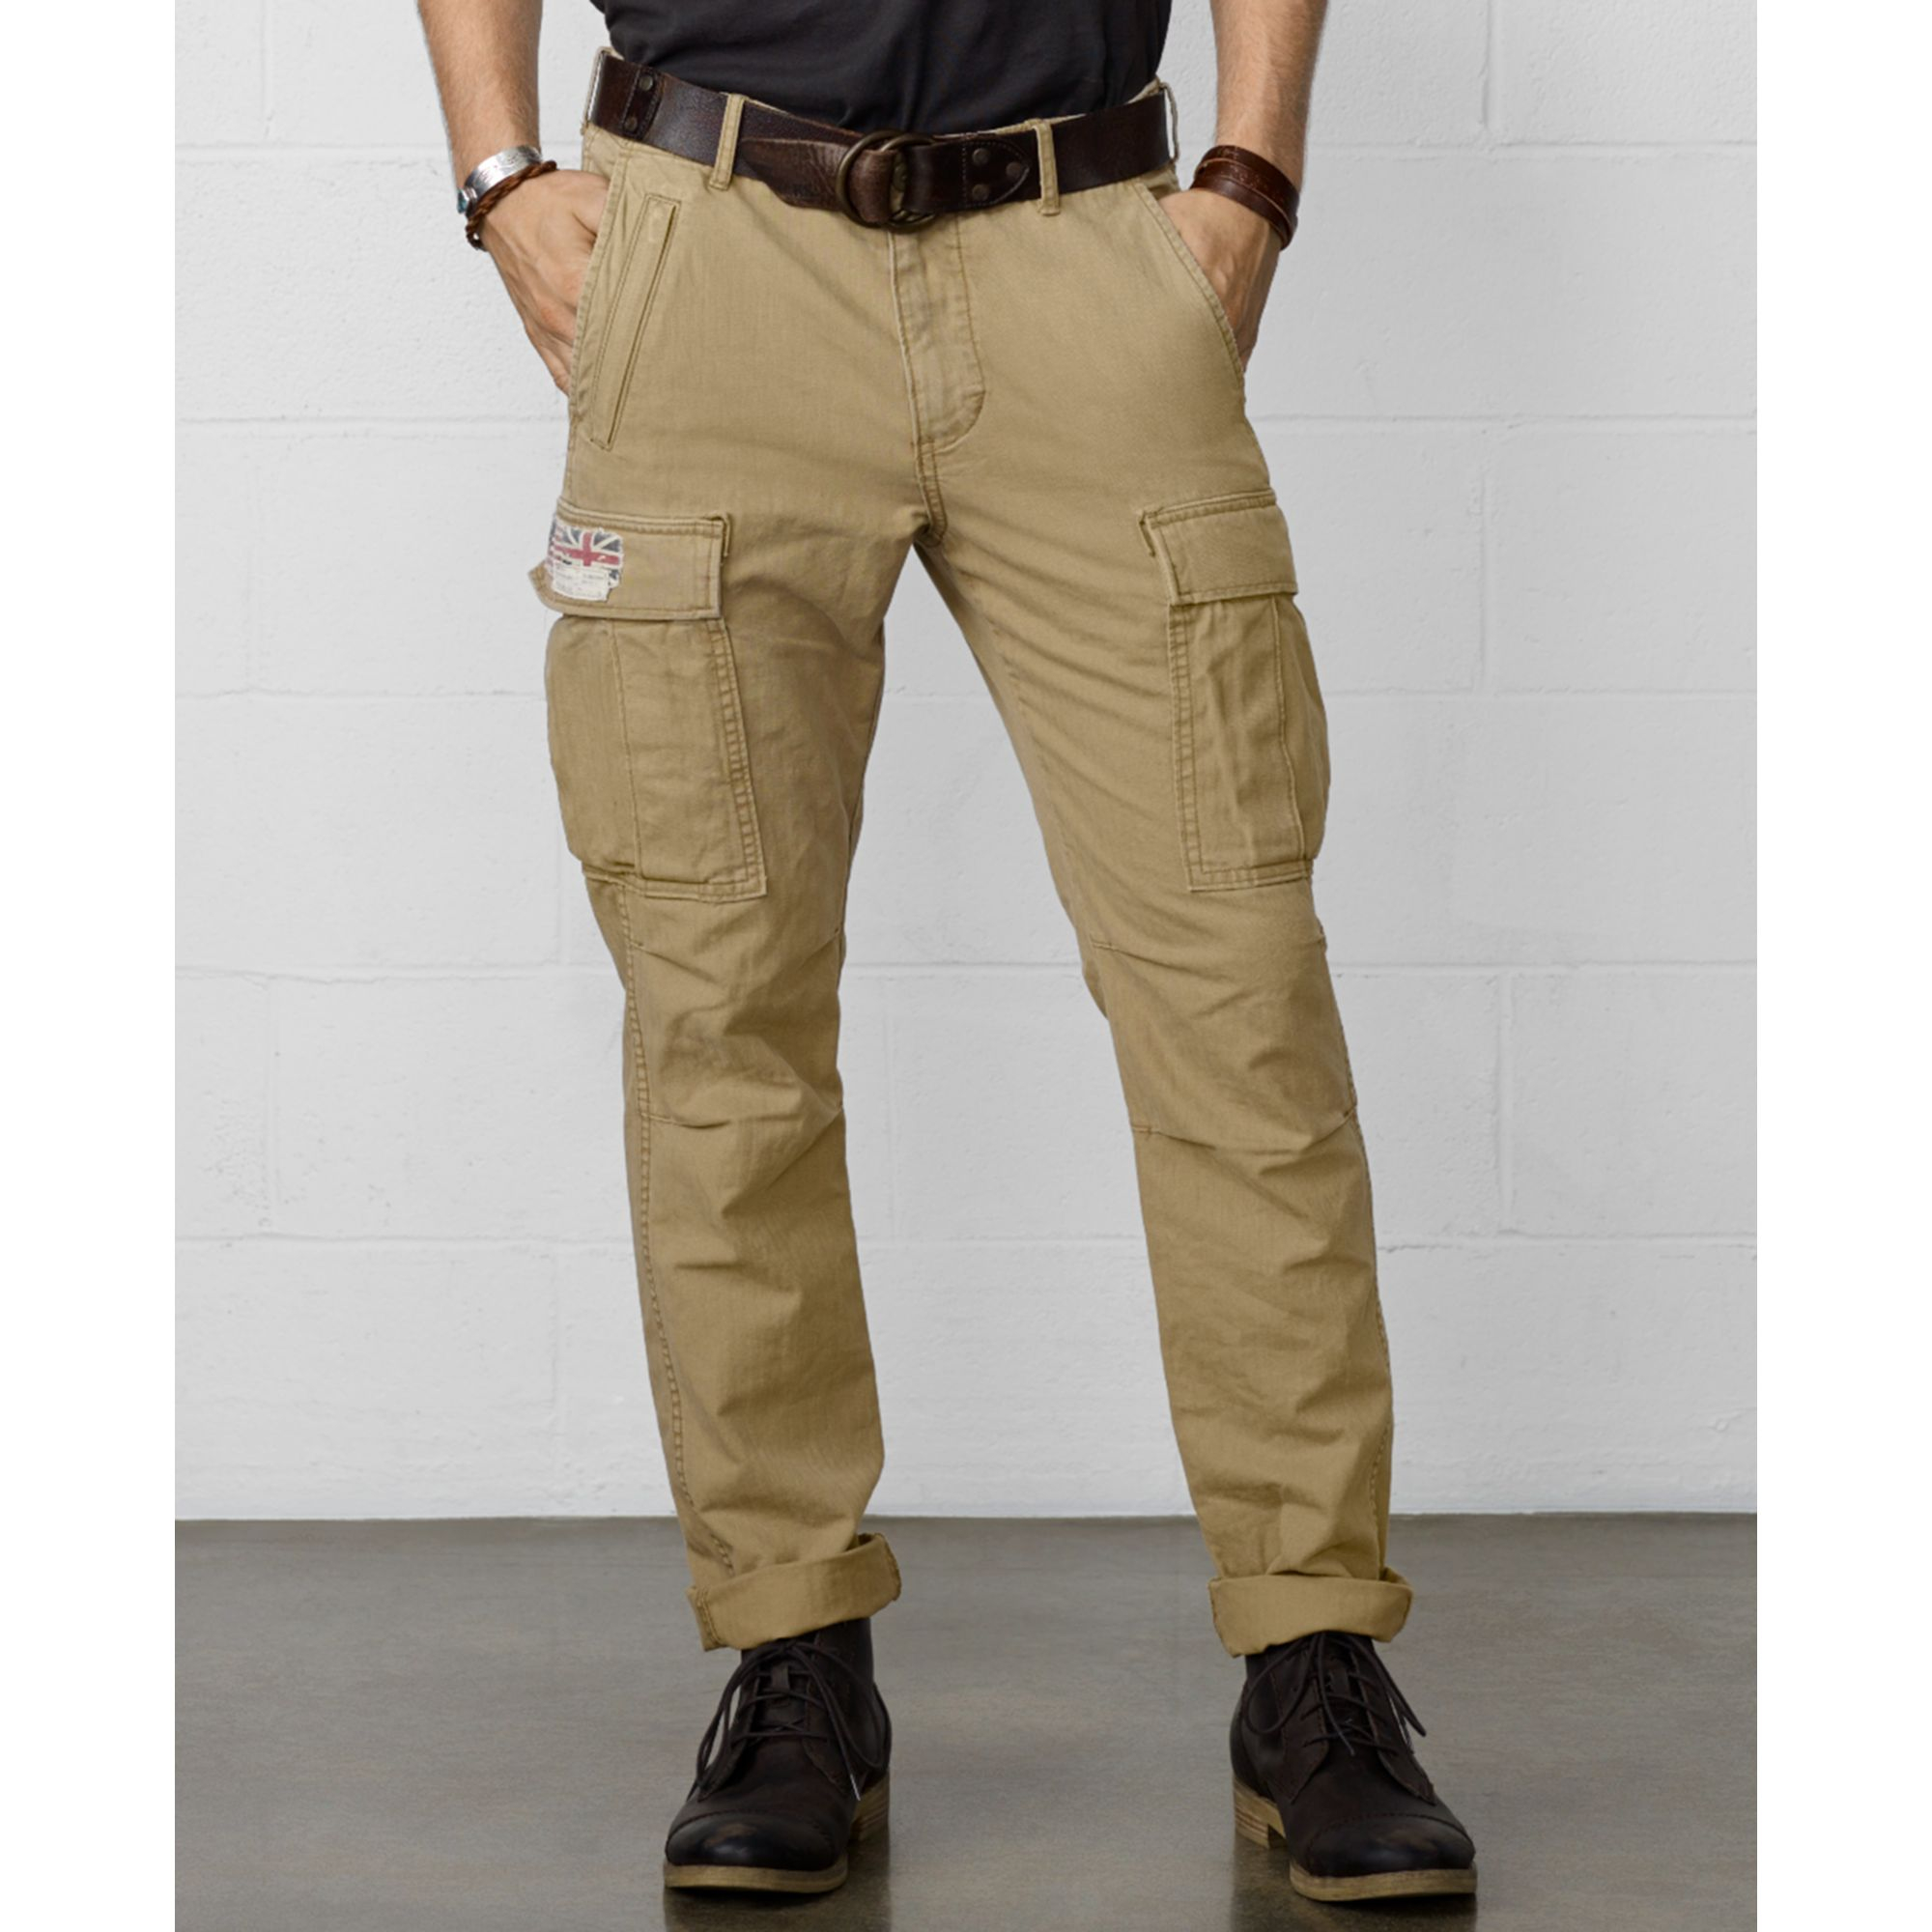 Khaki cargo pants for men pictures - Khaki Pants for Men Men's ...